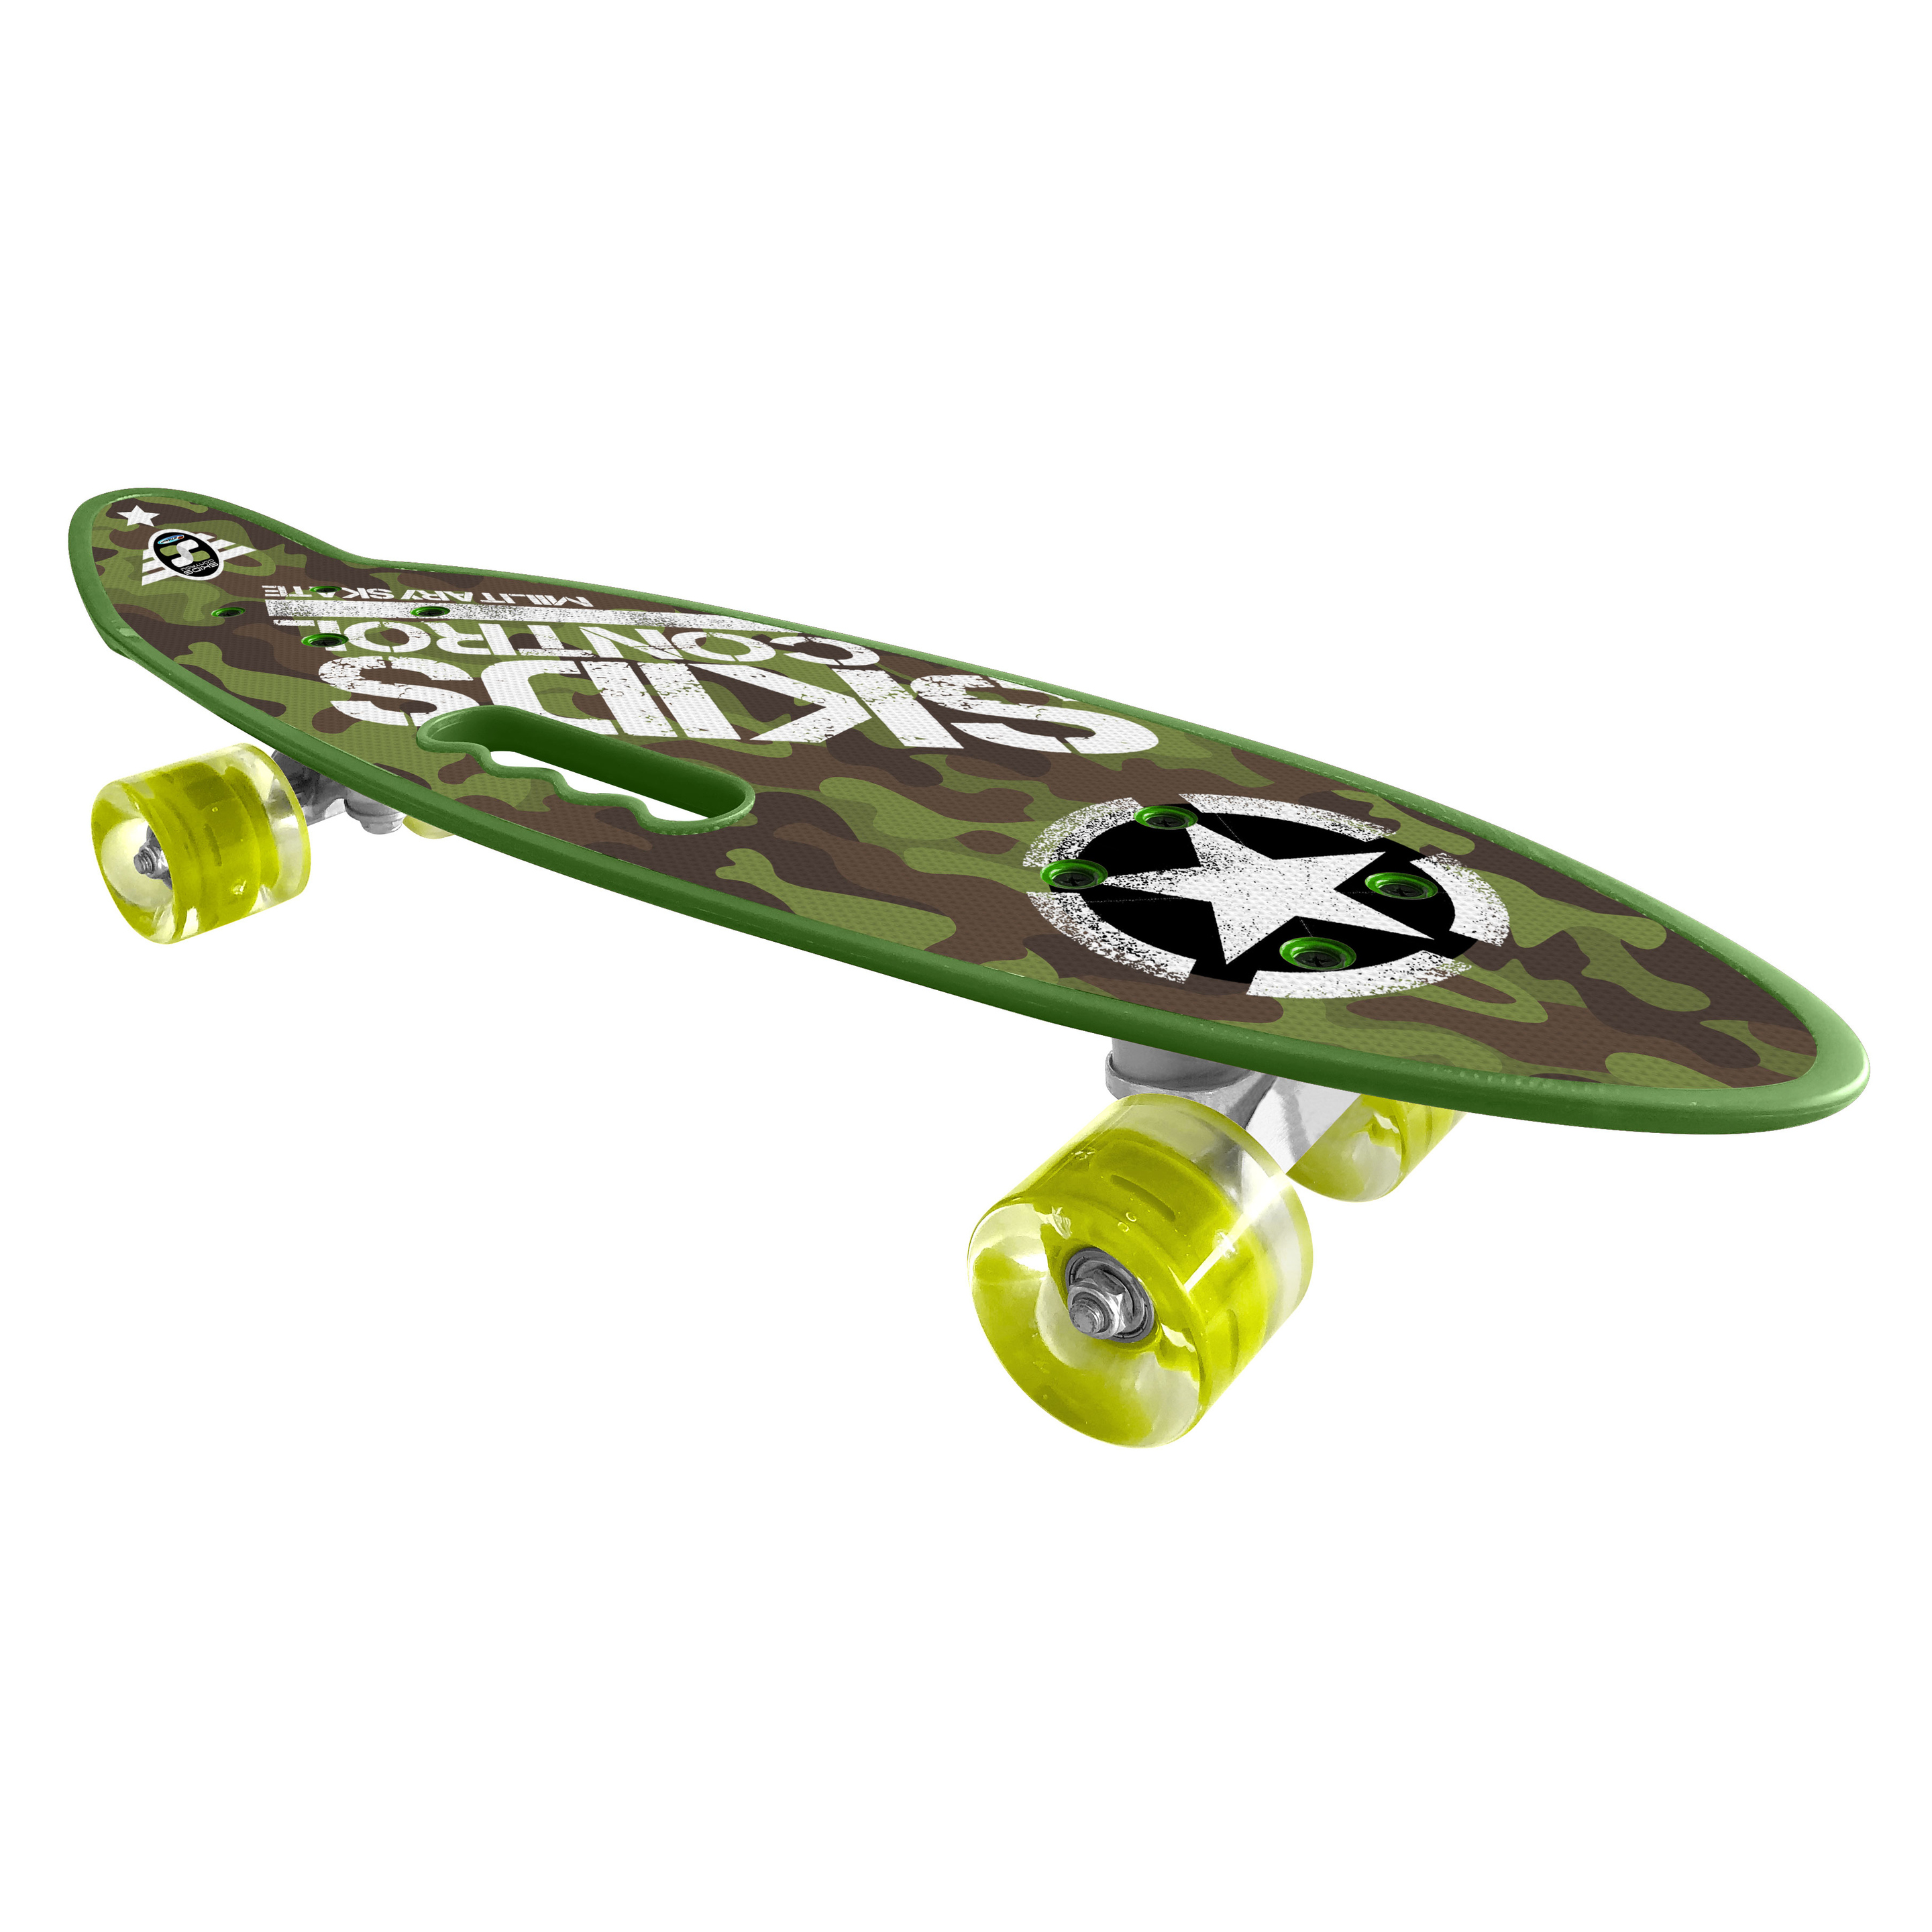 Skateboard Skids Control 24x7 Pulgadas